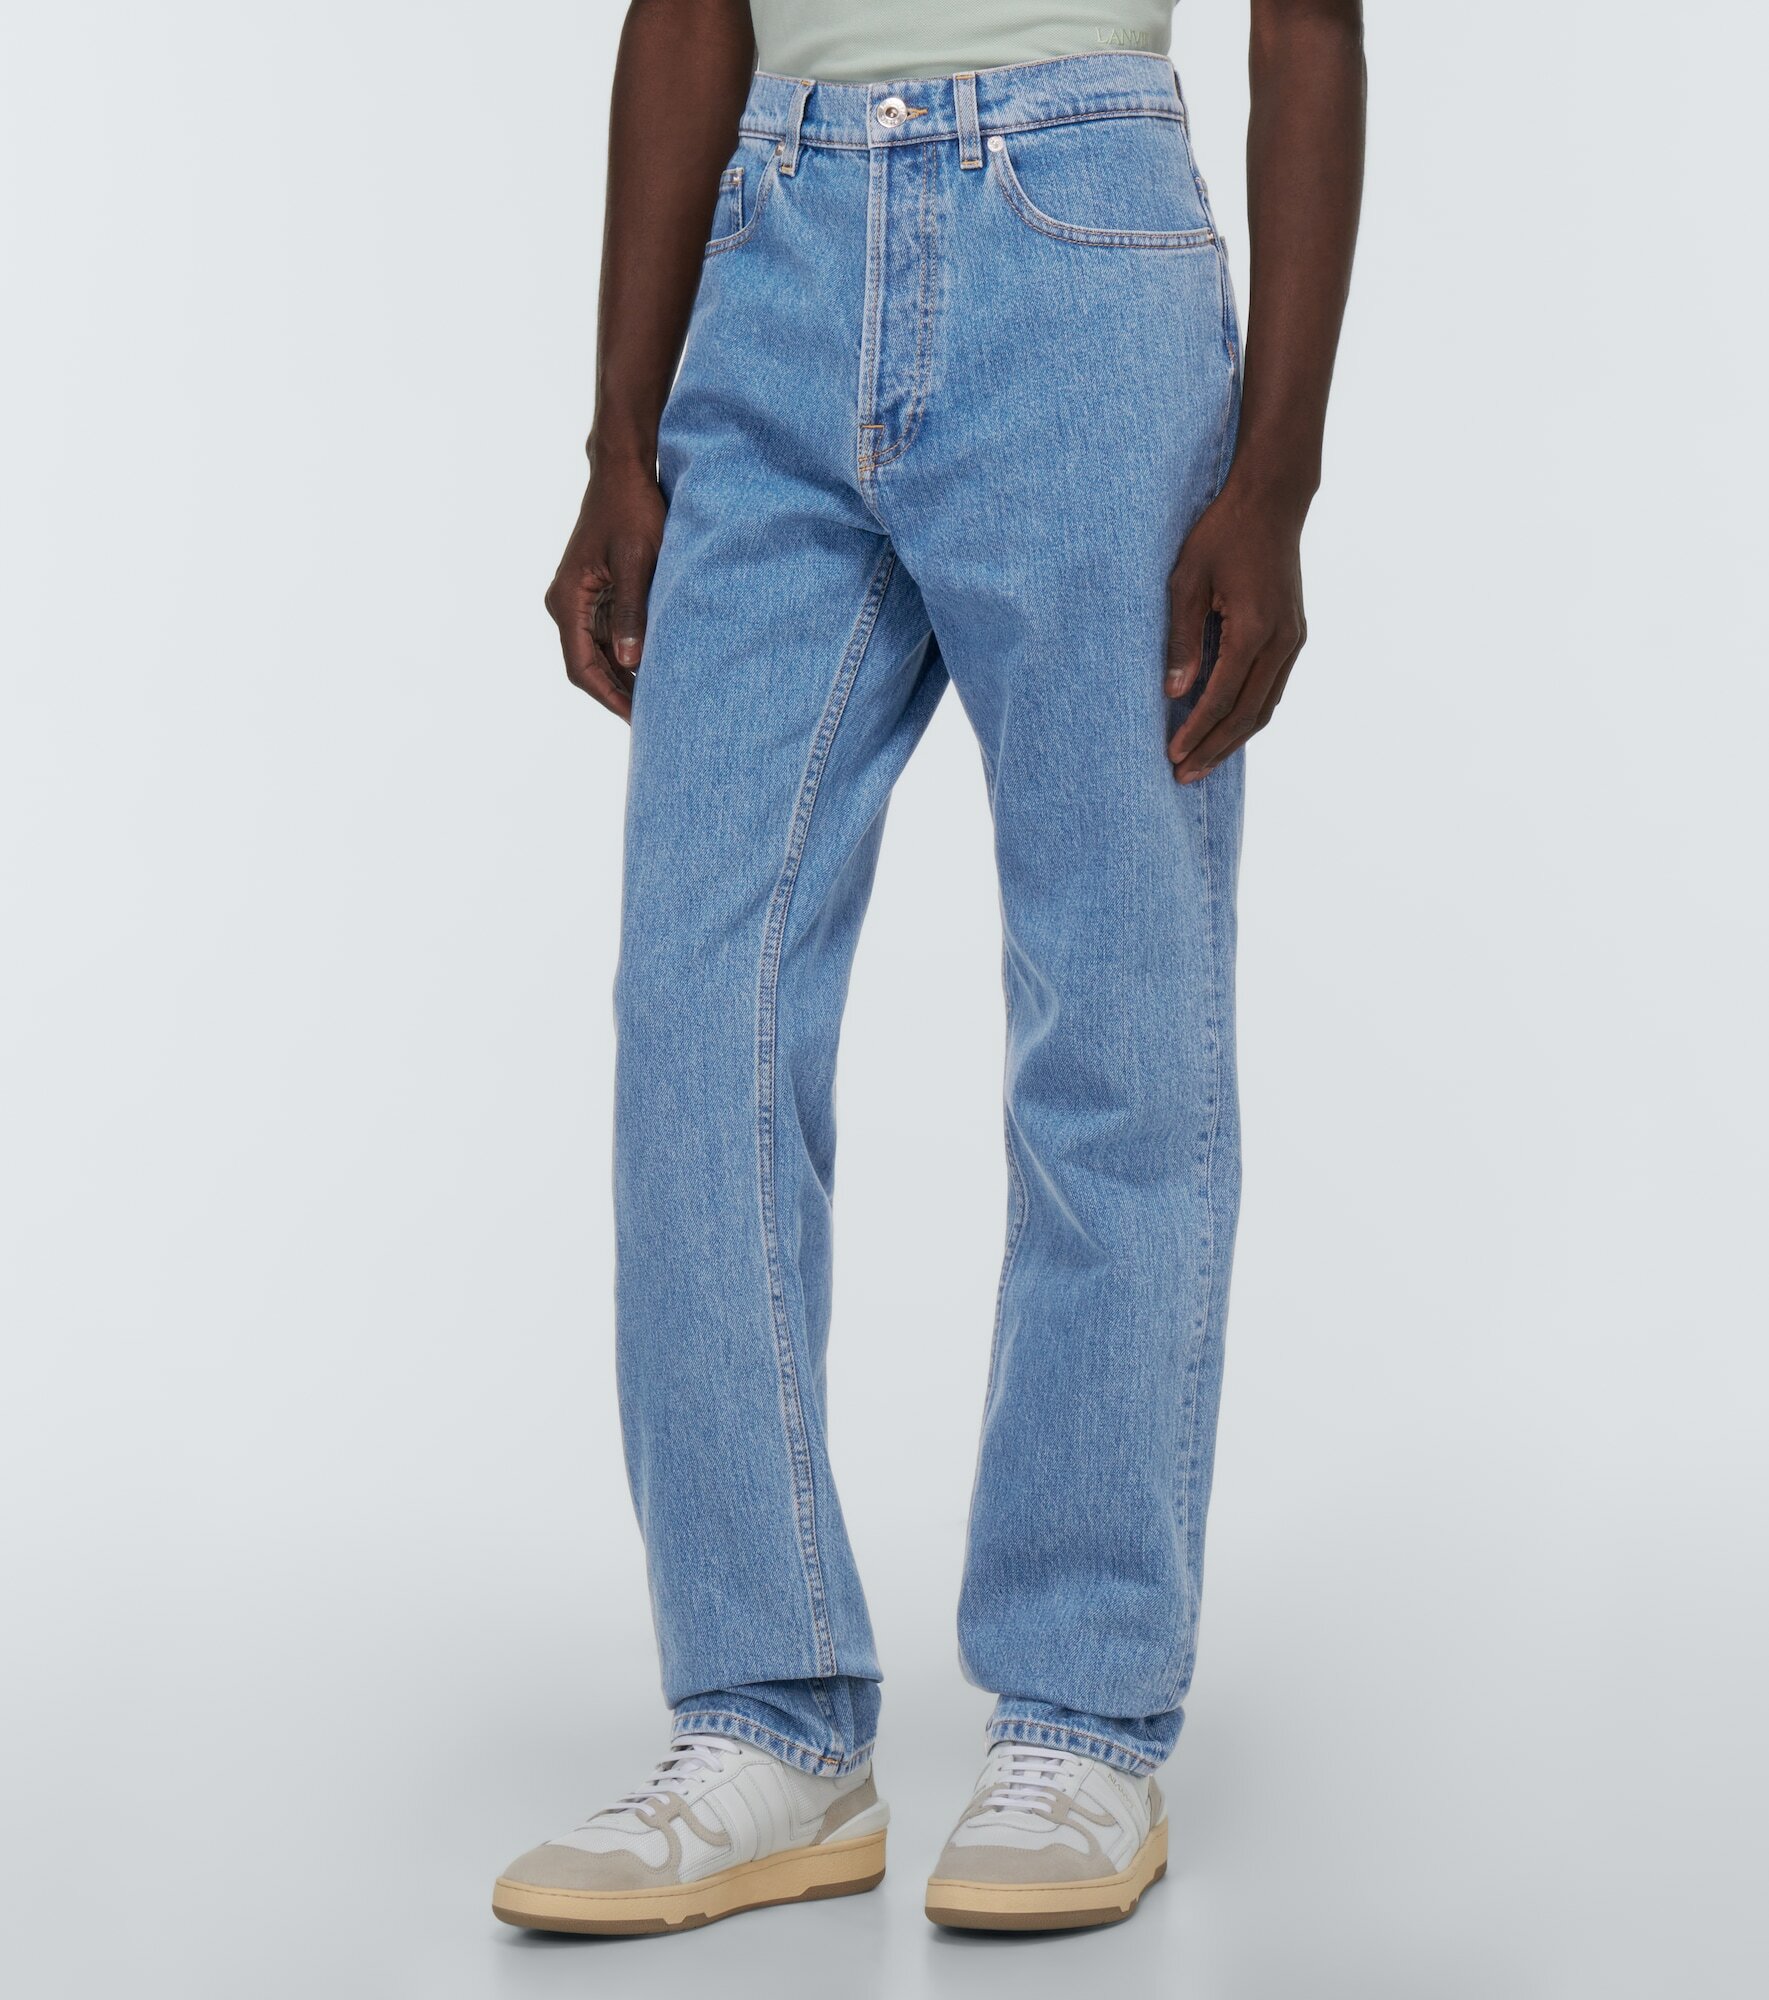 Lanvin - Straight jeans Lanvin